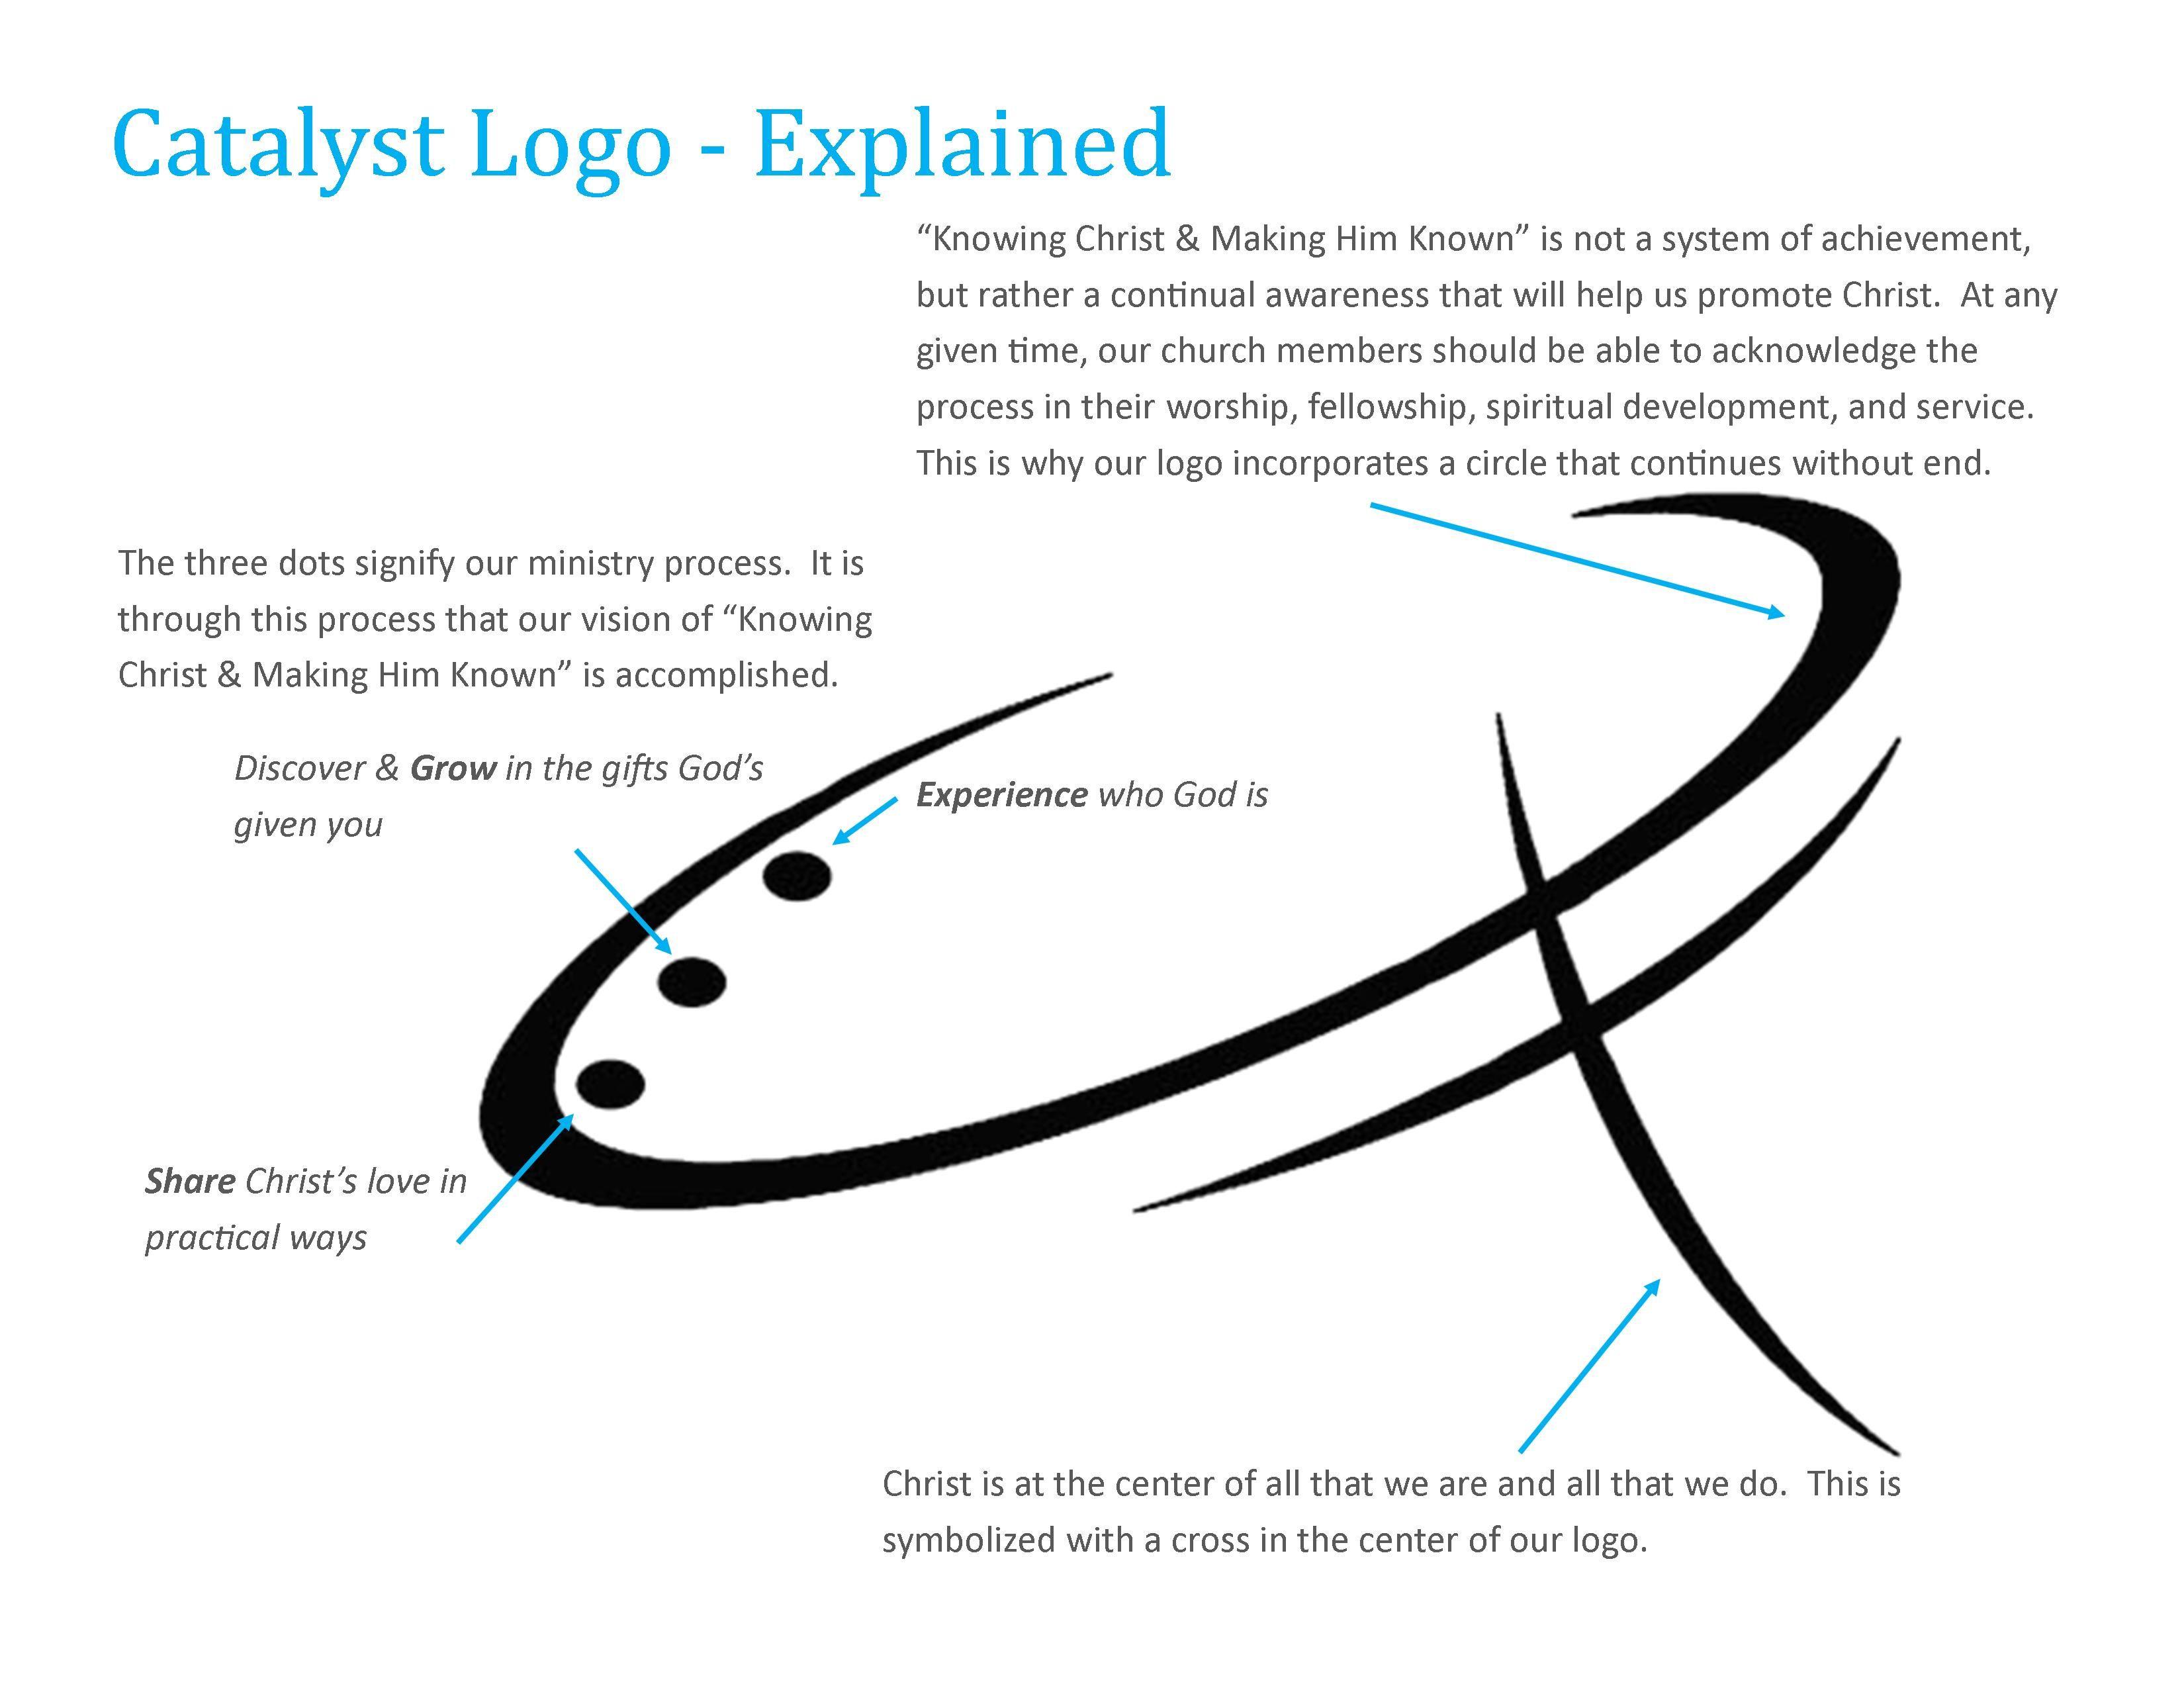 Catalyst Logo - Catalyst Church | Catalyst Logo